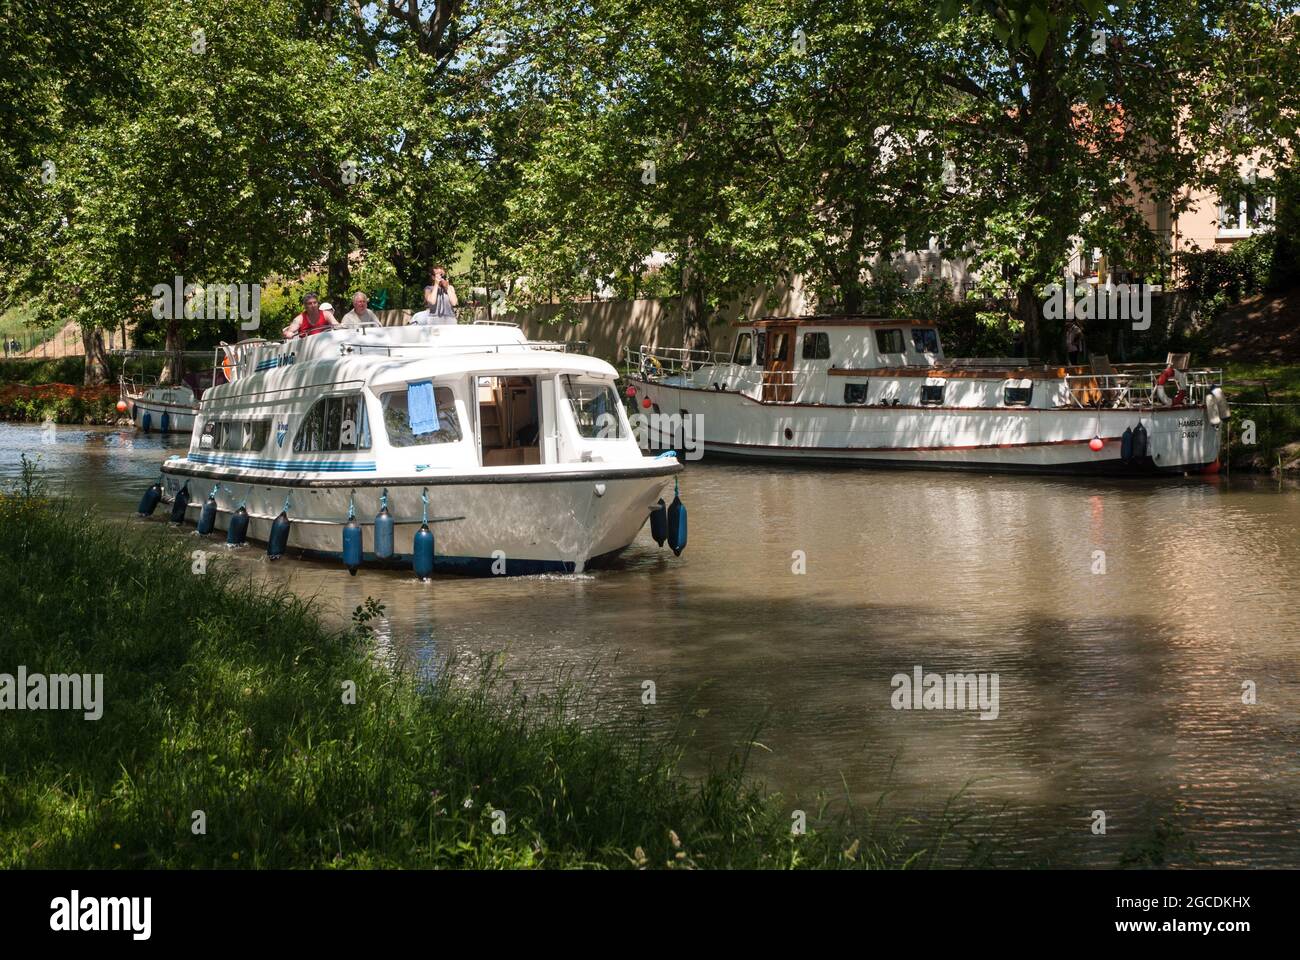 Rental boats for tourists on the Canal du Midi near Ventenac-en-Minervois Stock Photo